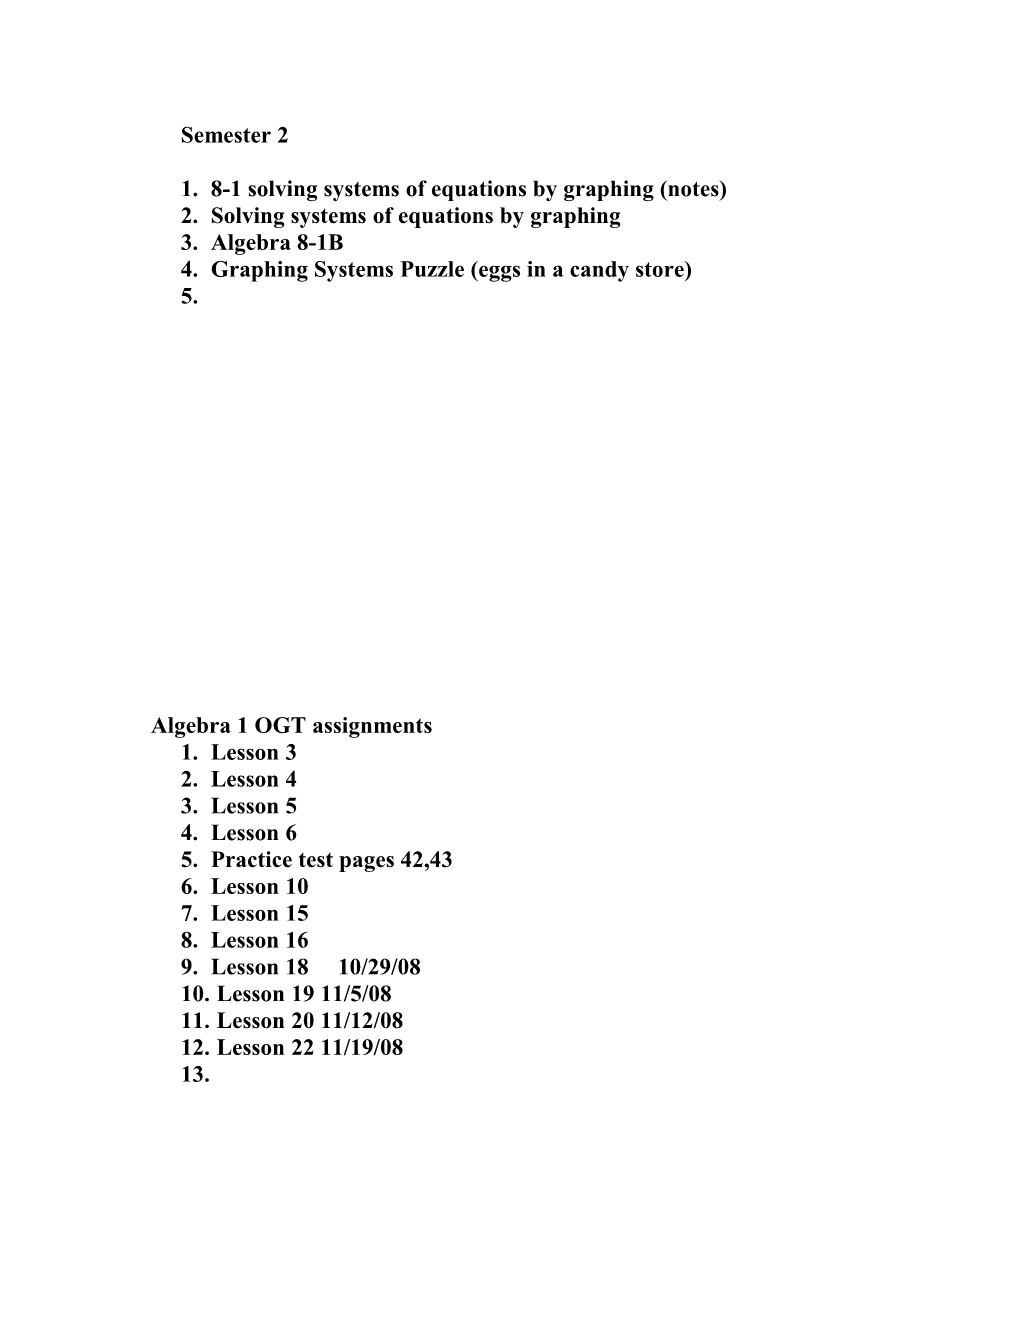 Algebra 9 and Algebra 1 Assignment List